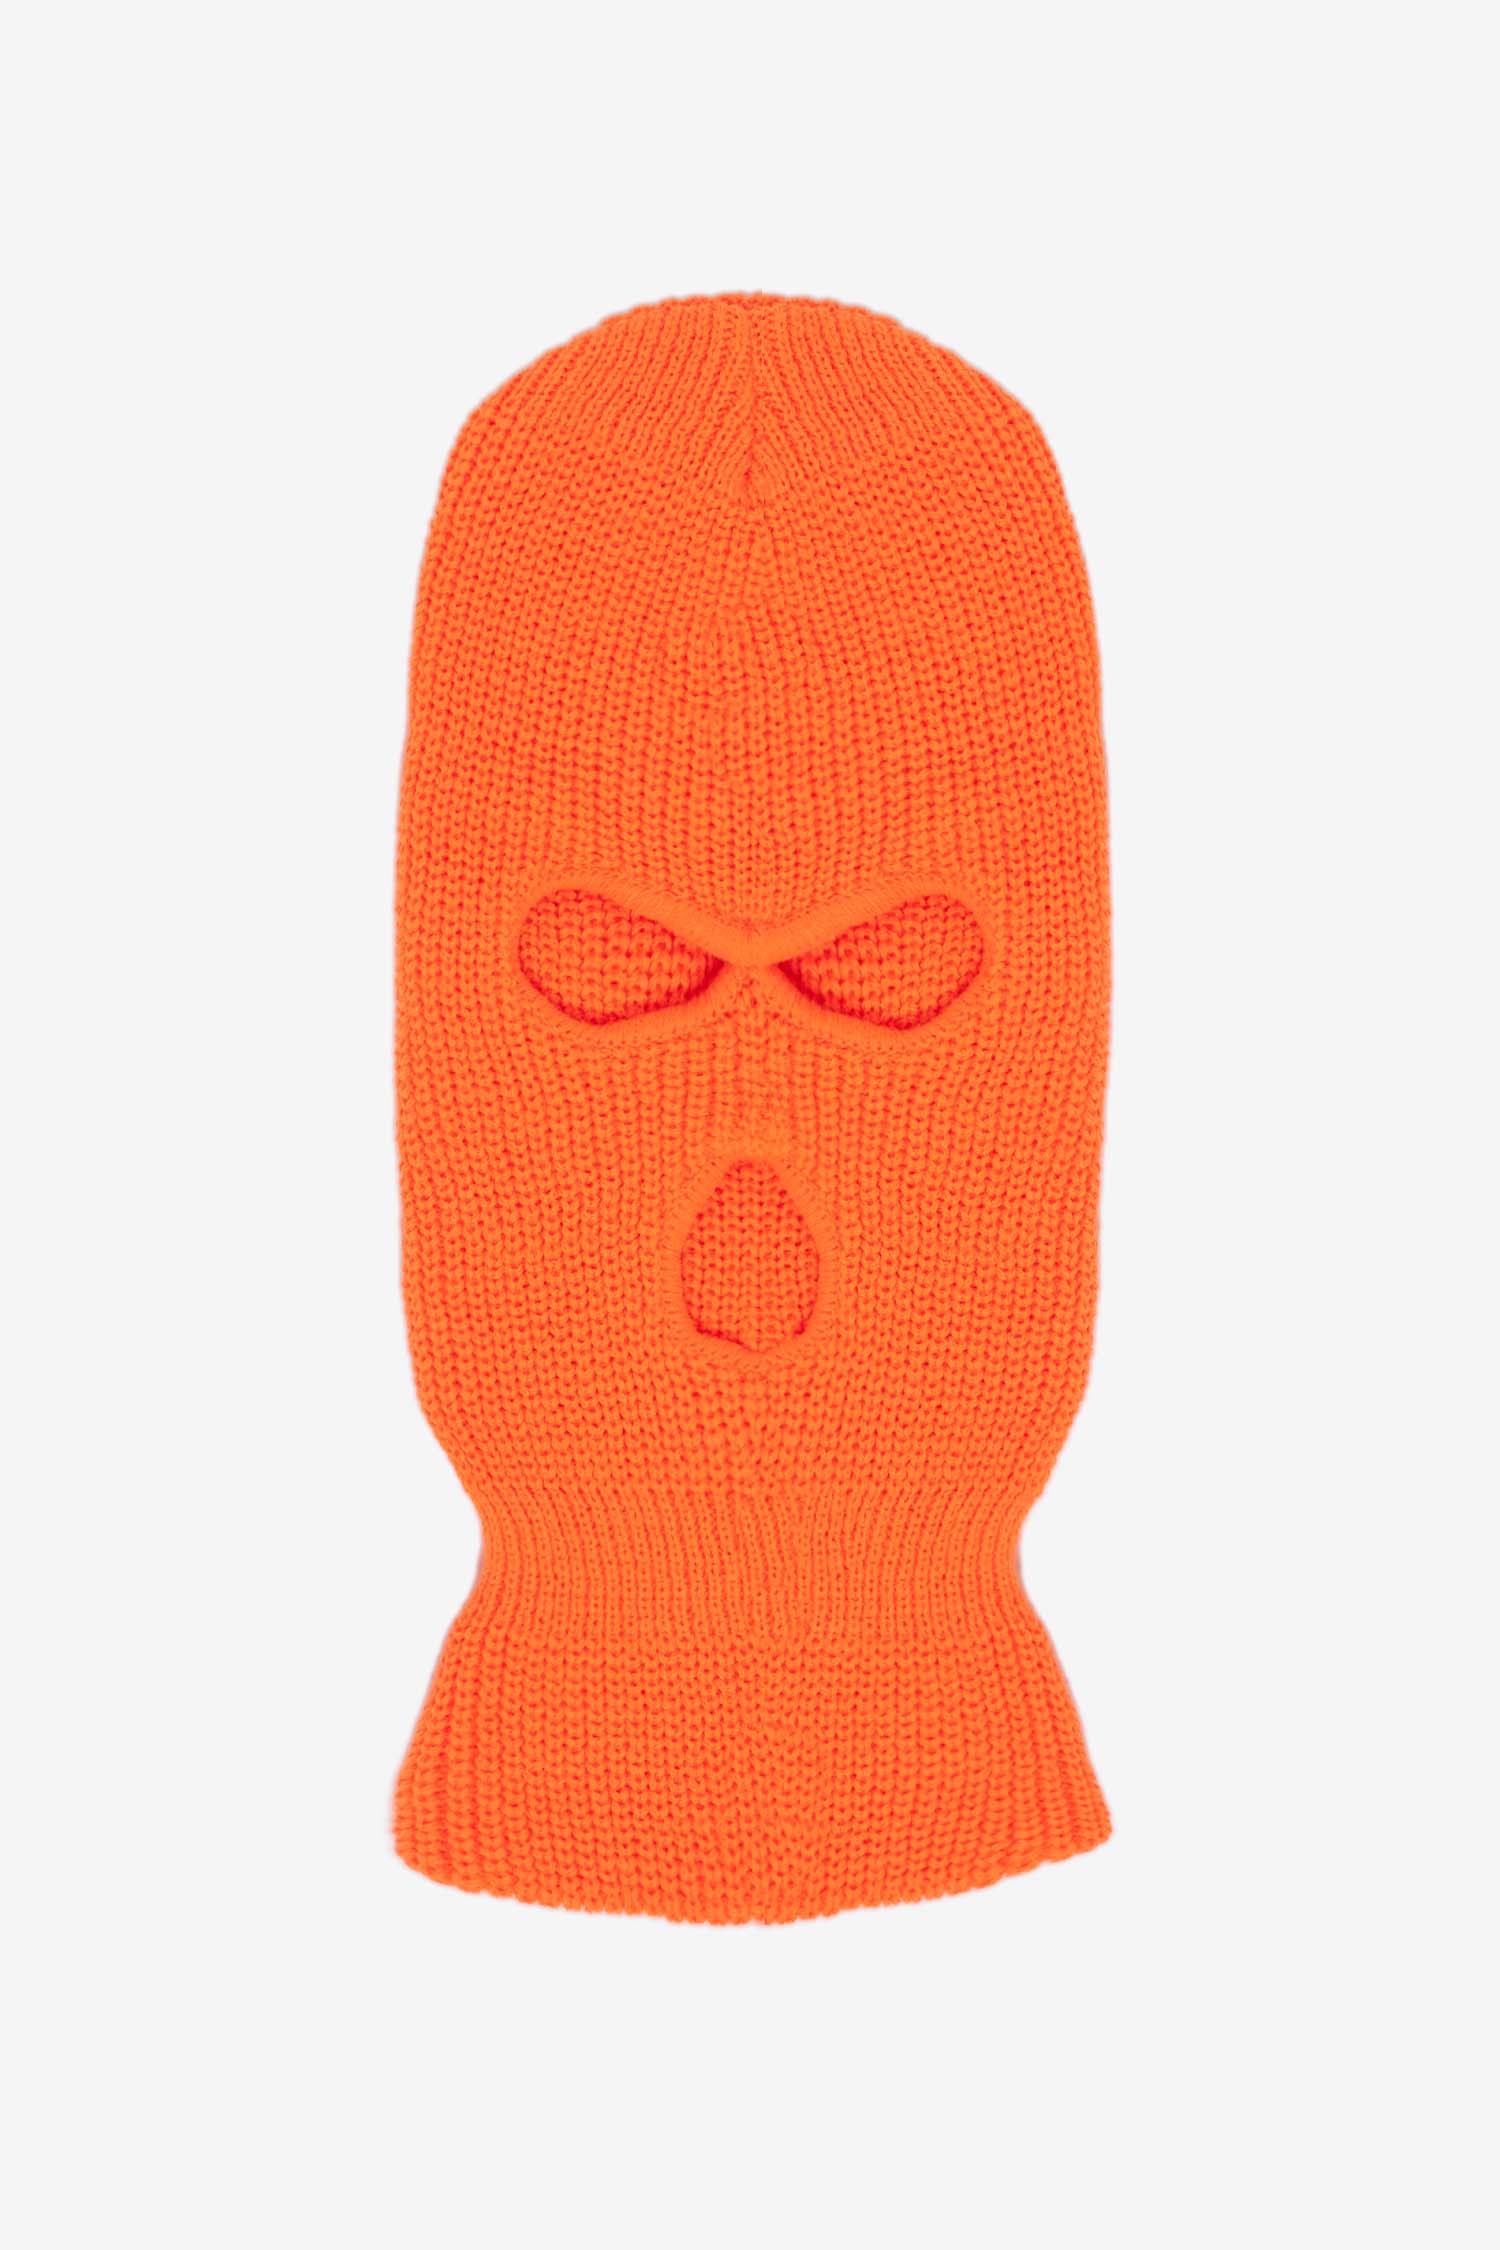 OneKind Customs Custom Printed Ski Masks/balaclavas VL1 Orange